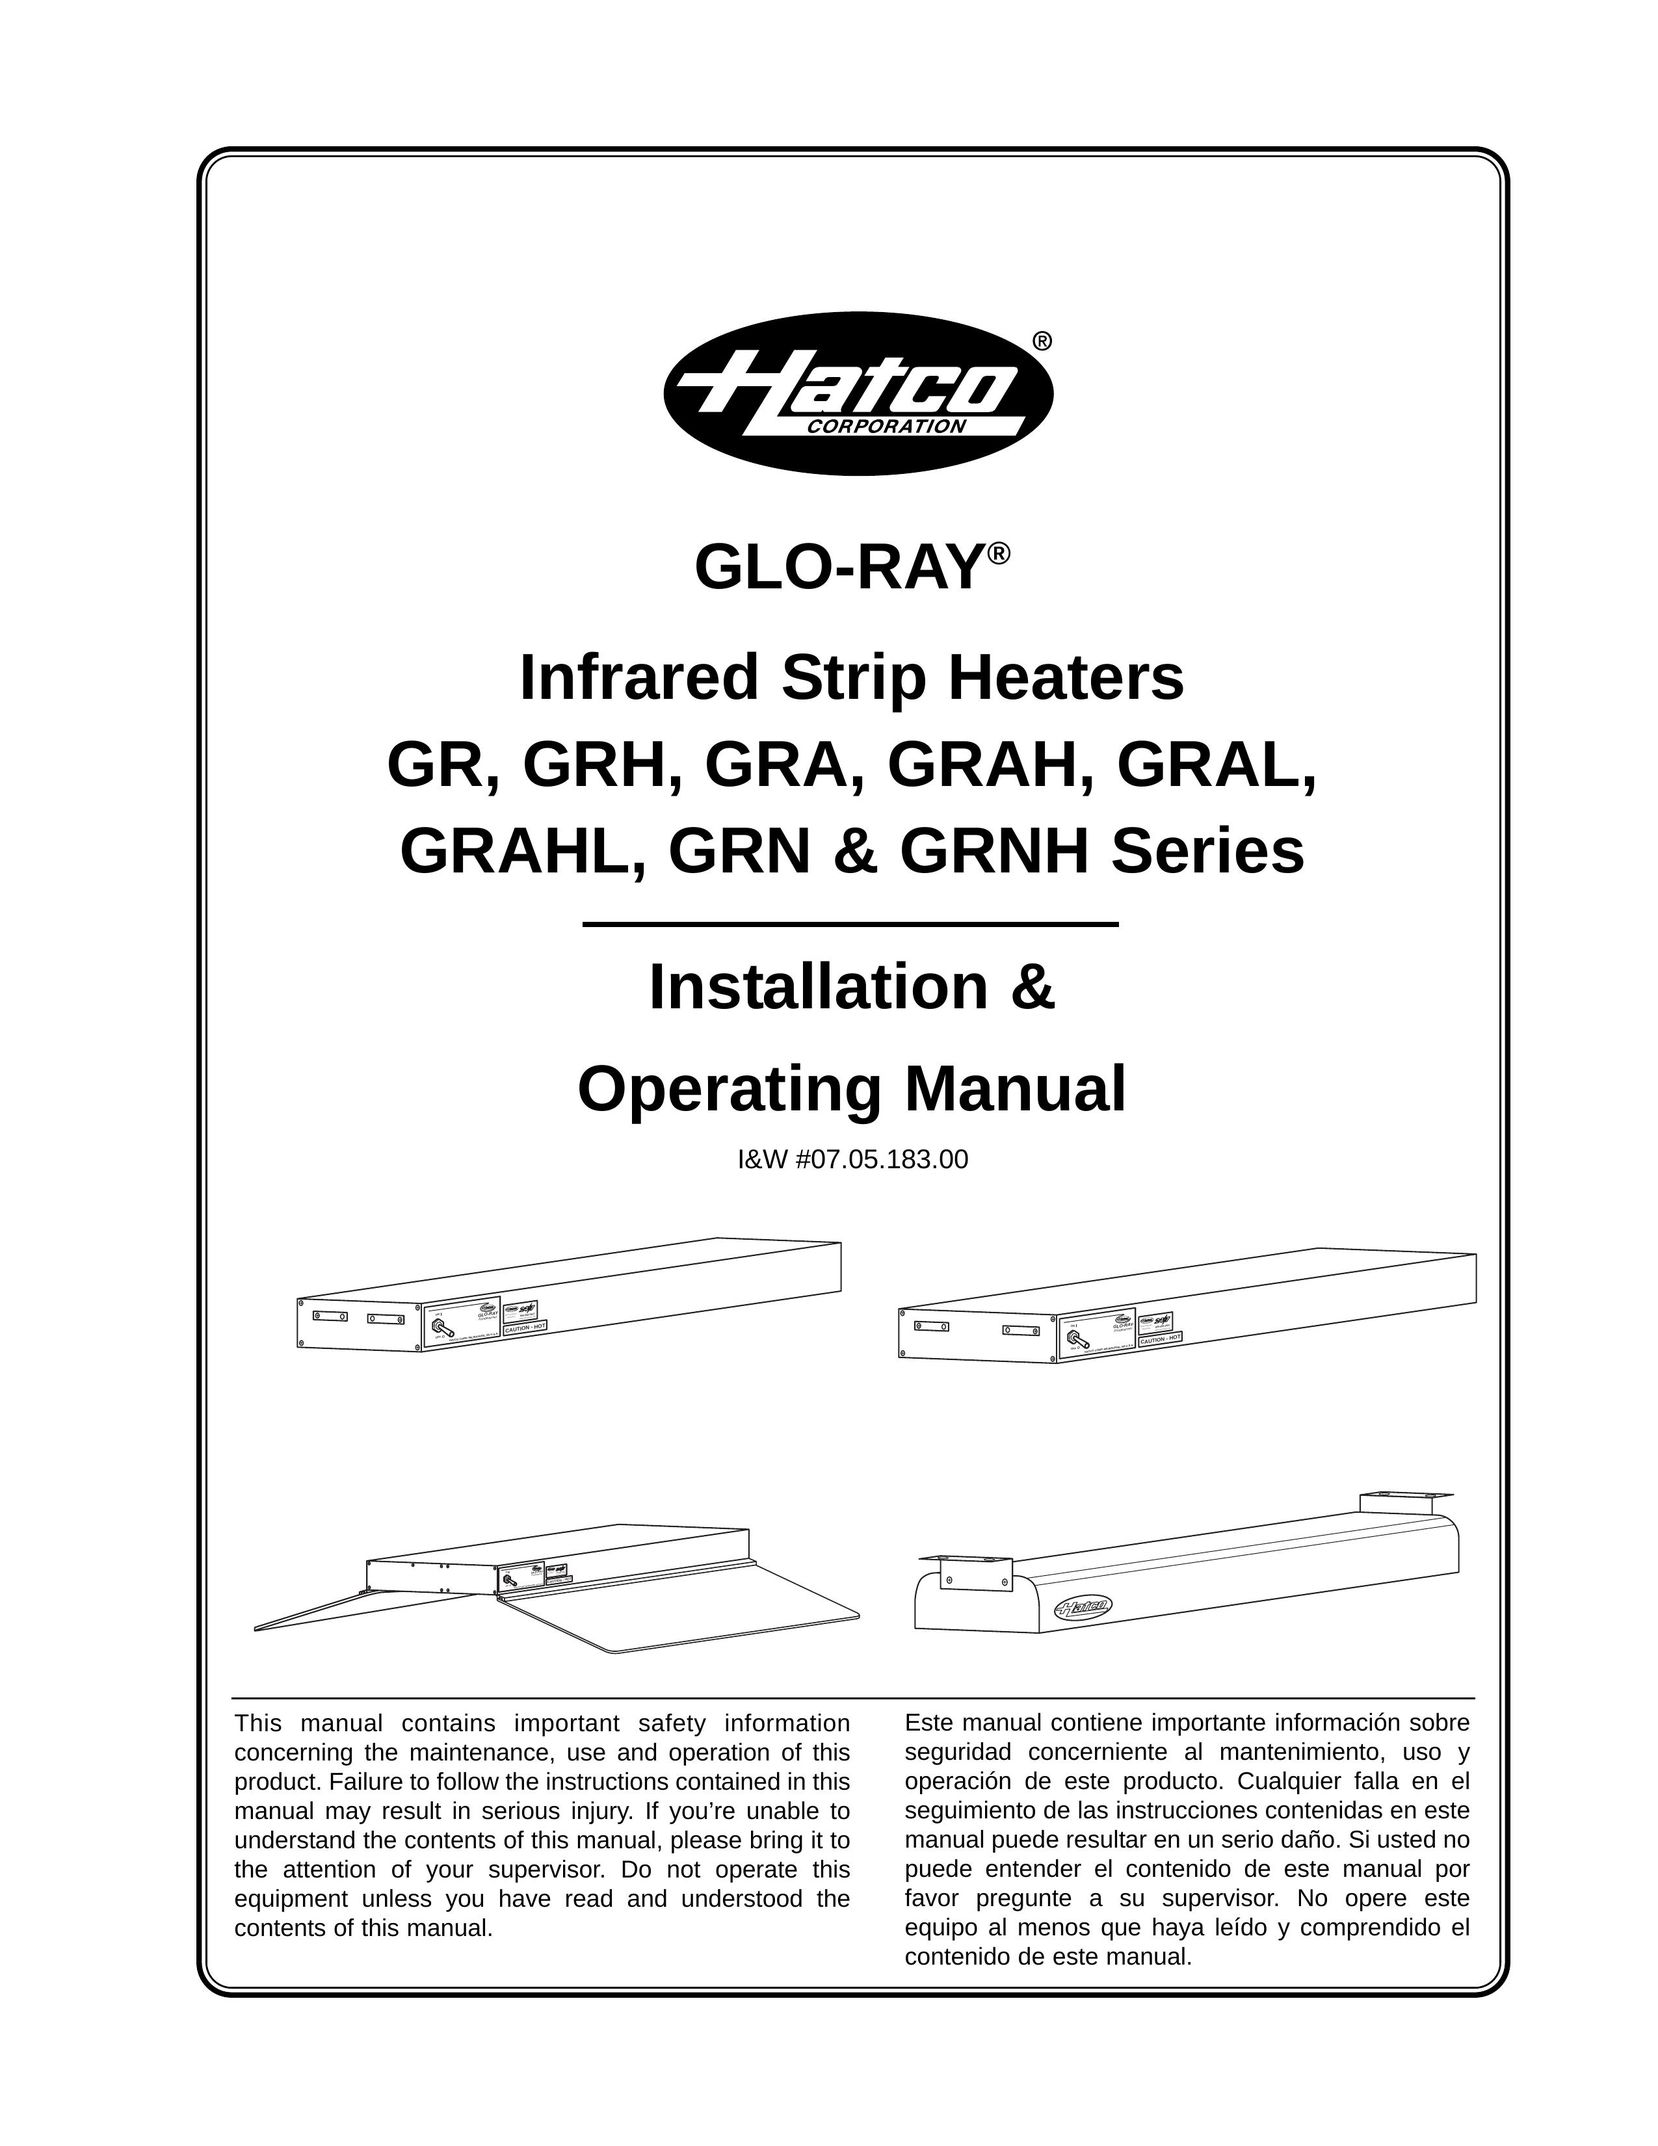 Hatco GRA Printer Accessories User Manual